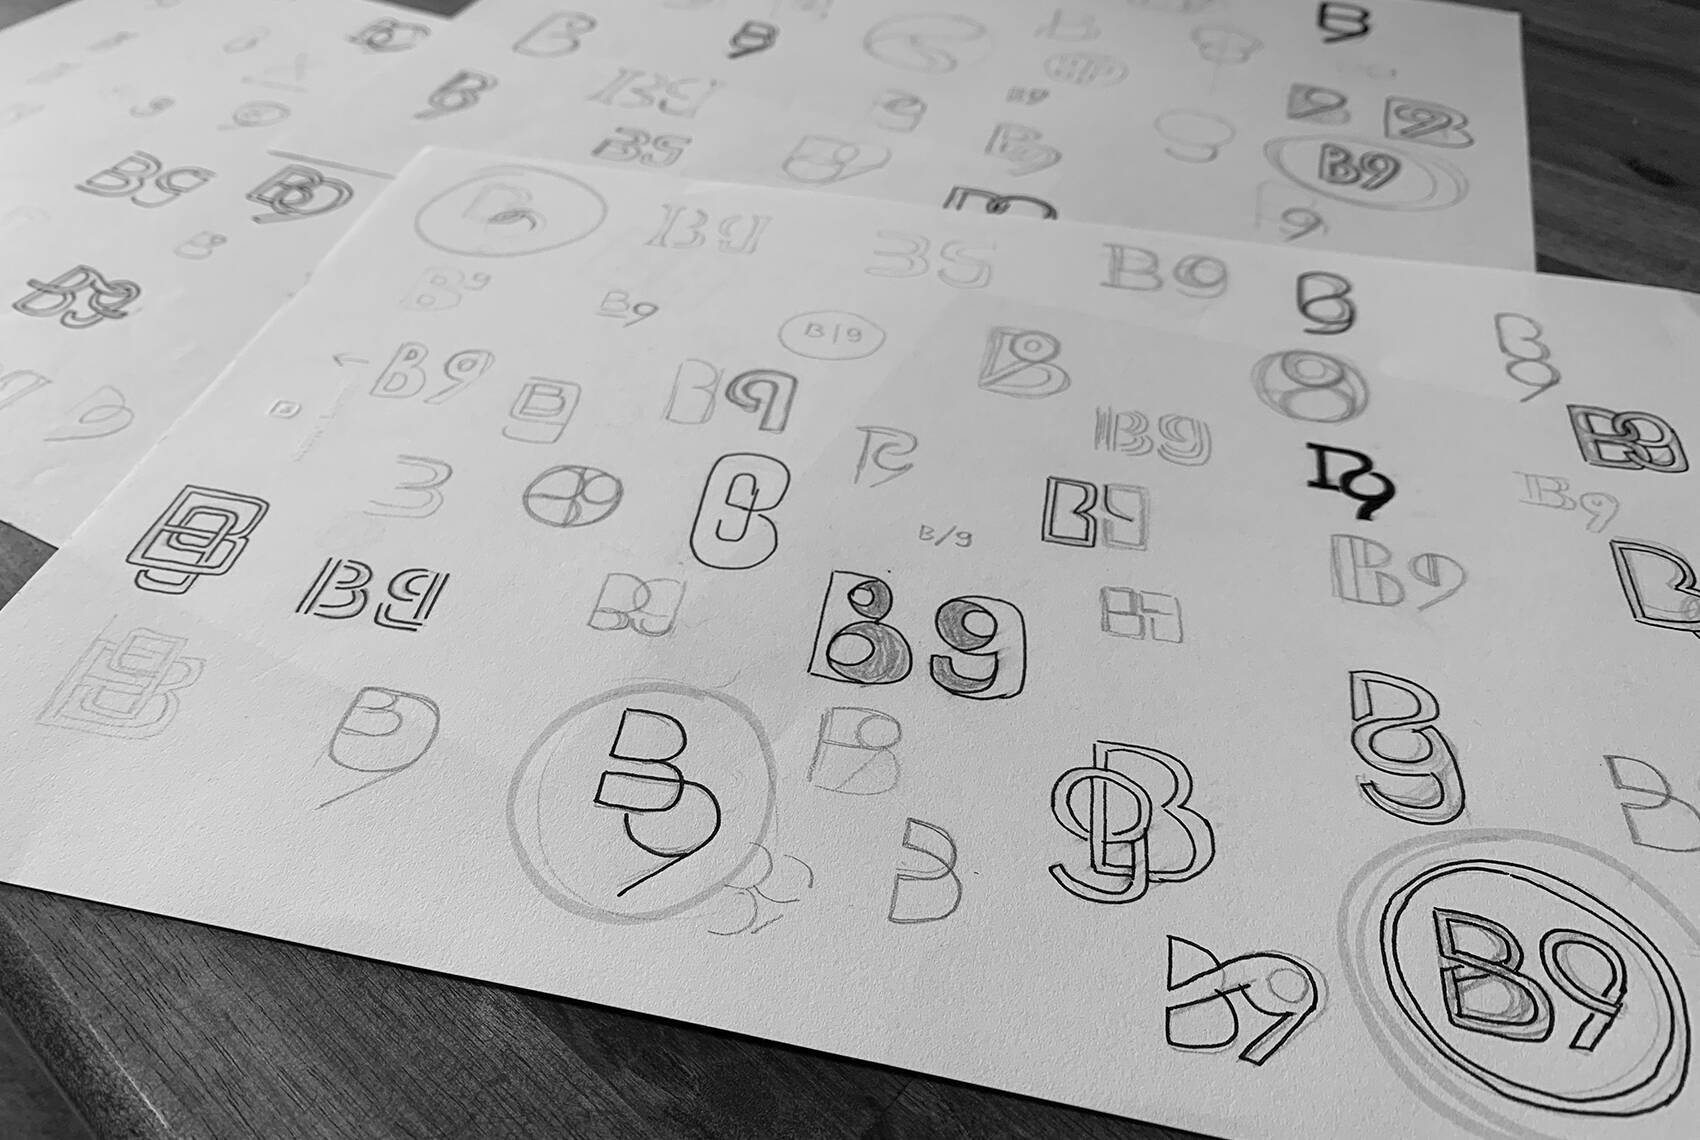 gabriela-martinelli-design_work_b9-lounge-bar_logo_sketches.jpg